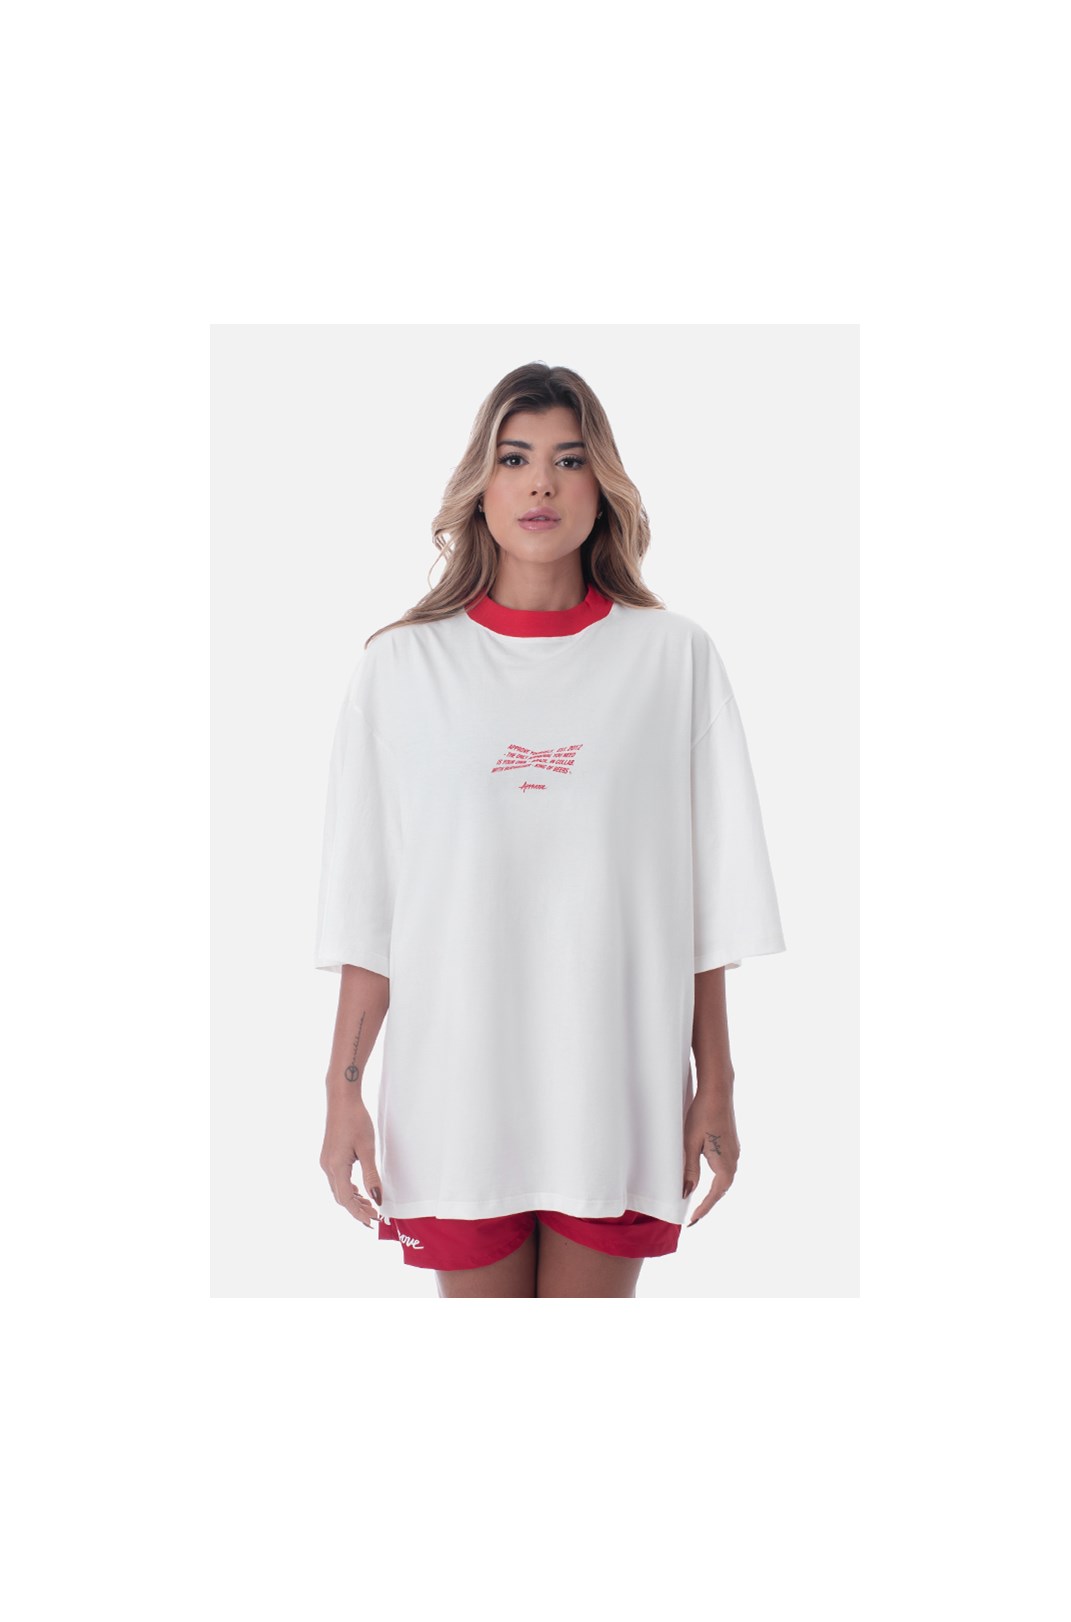 Camiseta Oversized Approve X Budweiser Off White E Vermelha